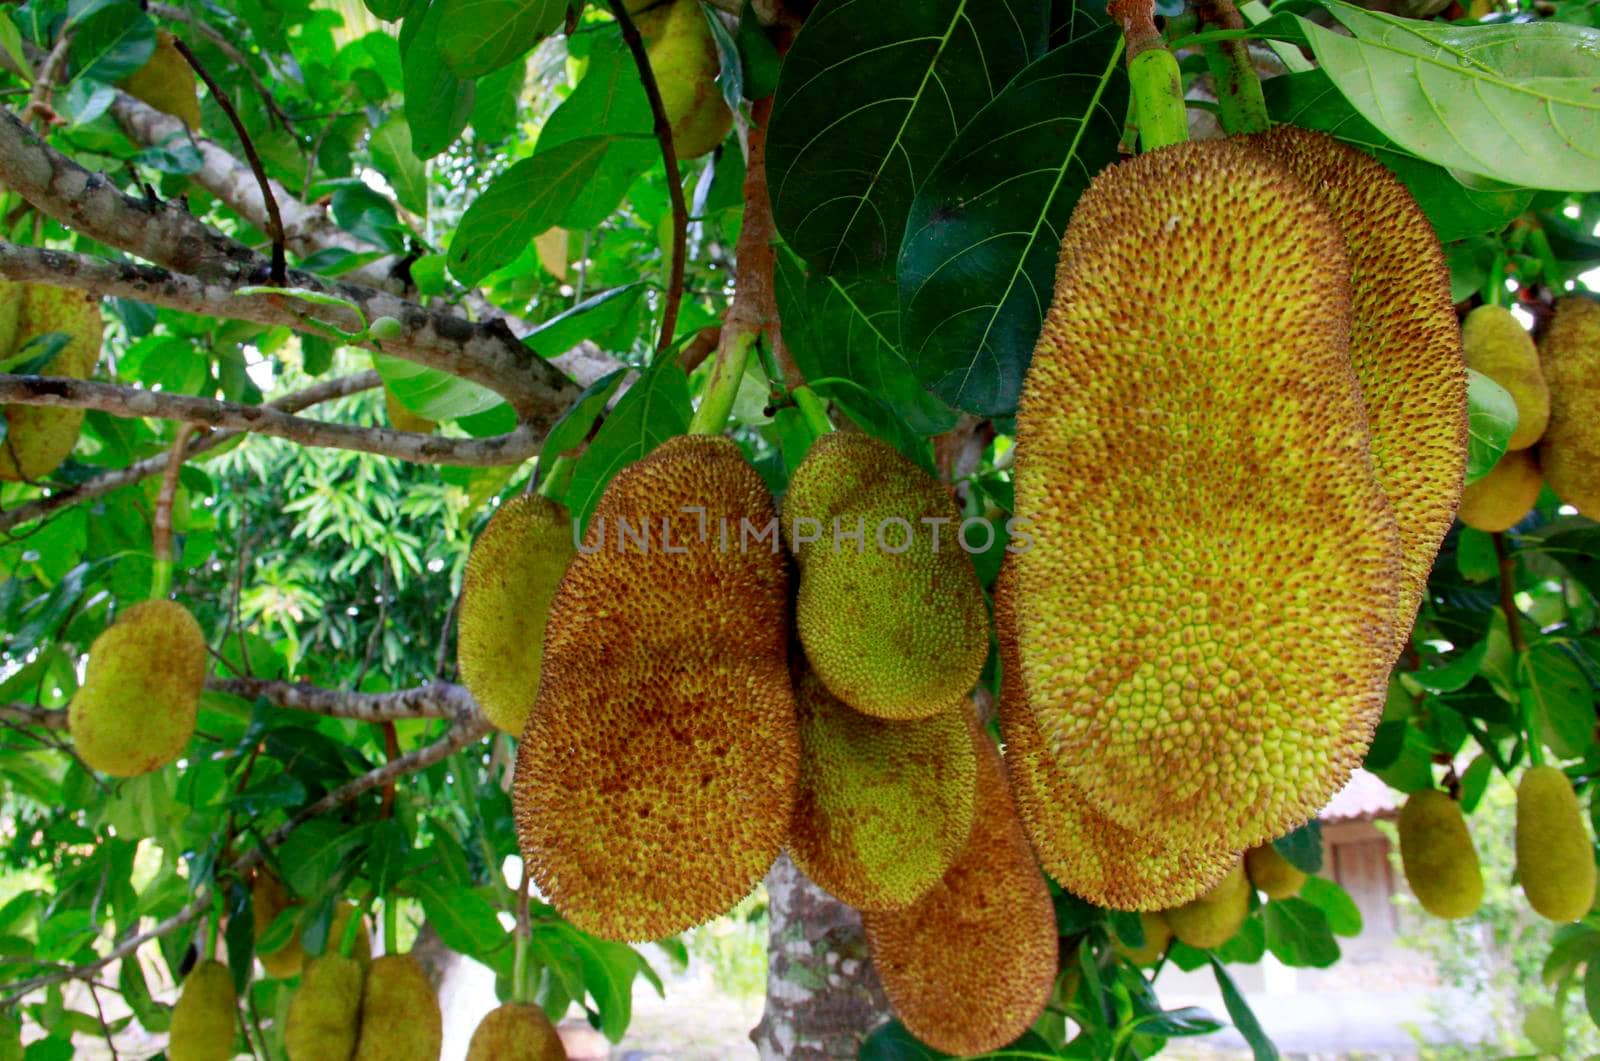 salvador, bahia / brazil - october 28, 2013: jackfruit and its fruits seen in the city of Salvador.